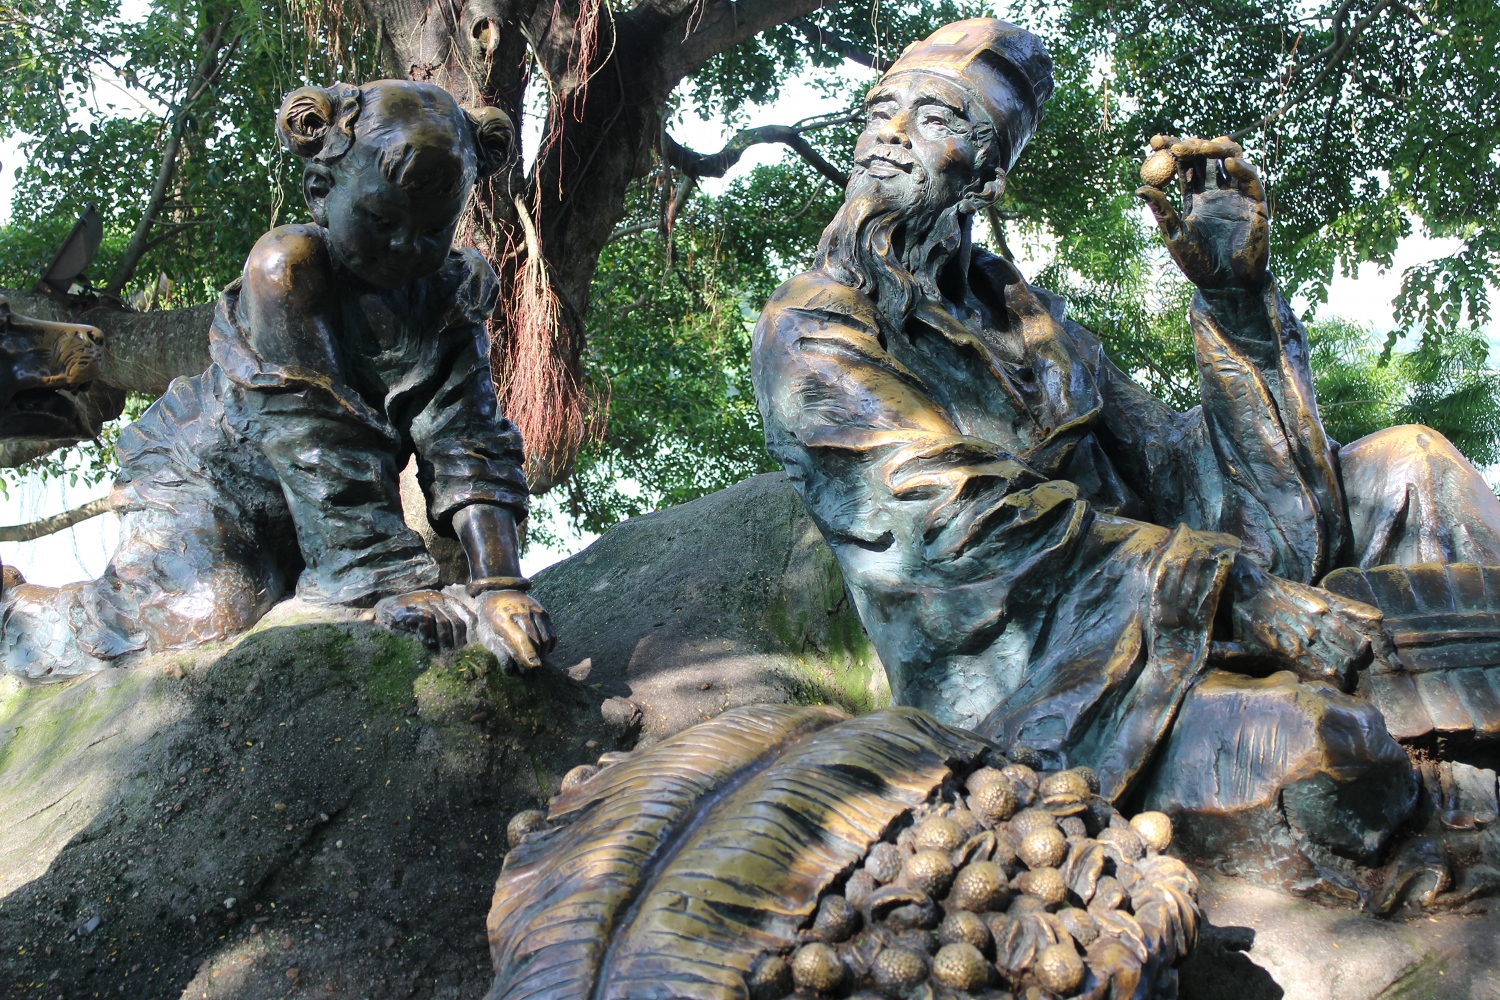 Poet Su Dongpo is immortalised in bronze statues around Huizhou. Image by Thomas Bird / londoninfopagePoet Su Dongpo is immortalised in bronze statues around Huizhou. Image by Thomas Bird / londoninfopage